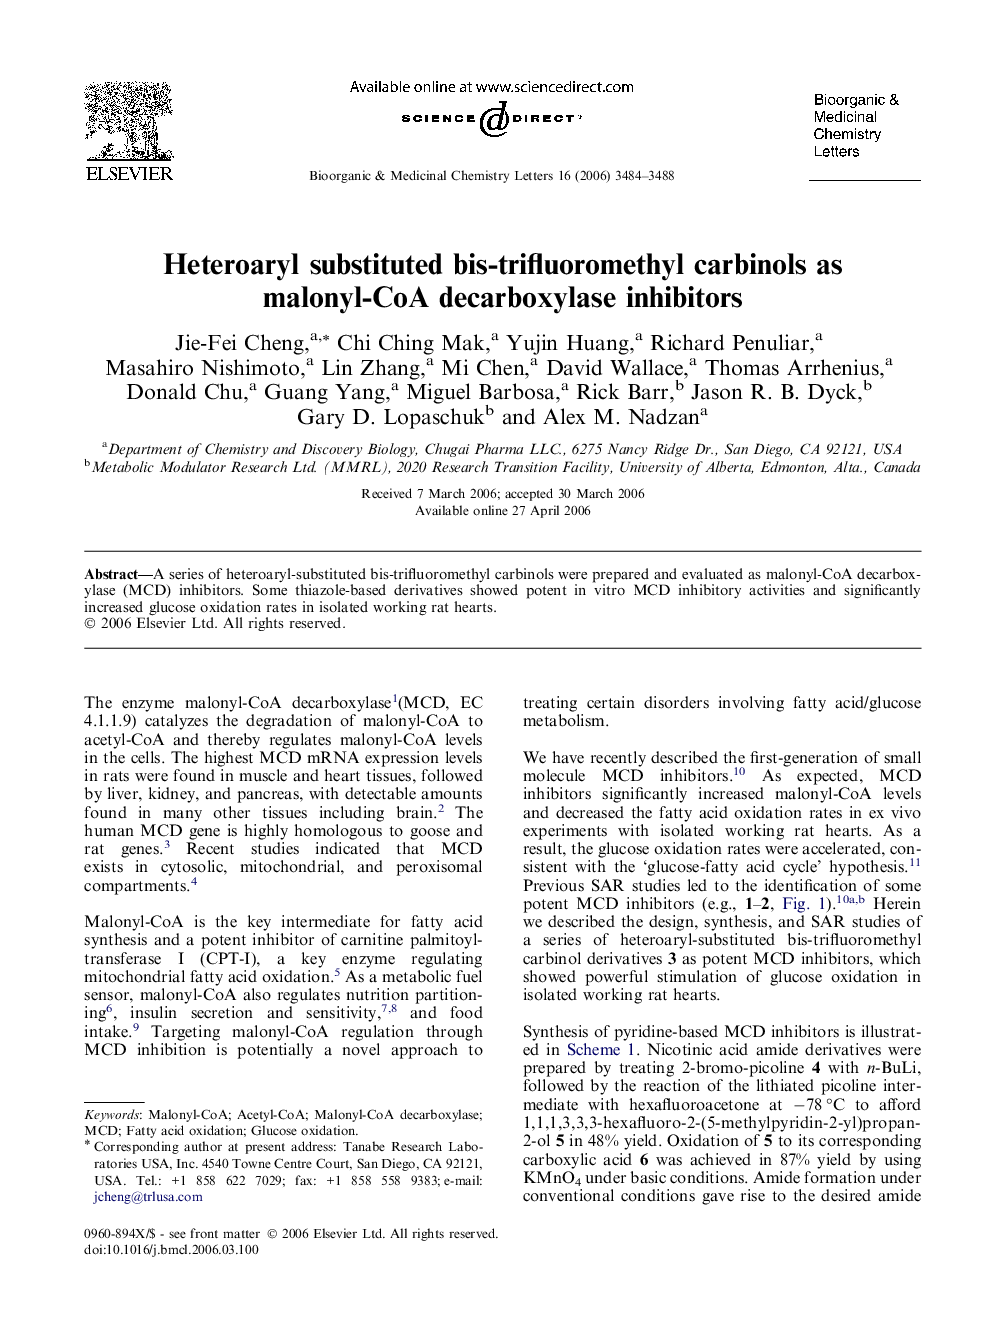 Heteroaryl substituted bis-trifluoromethyl carbinols as malonyl-CoA decarboxylase inhibitors